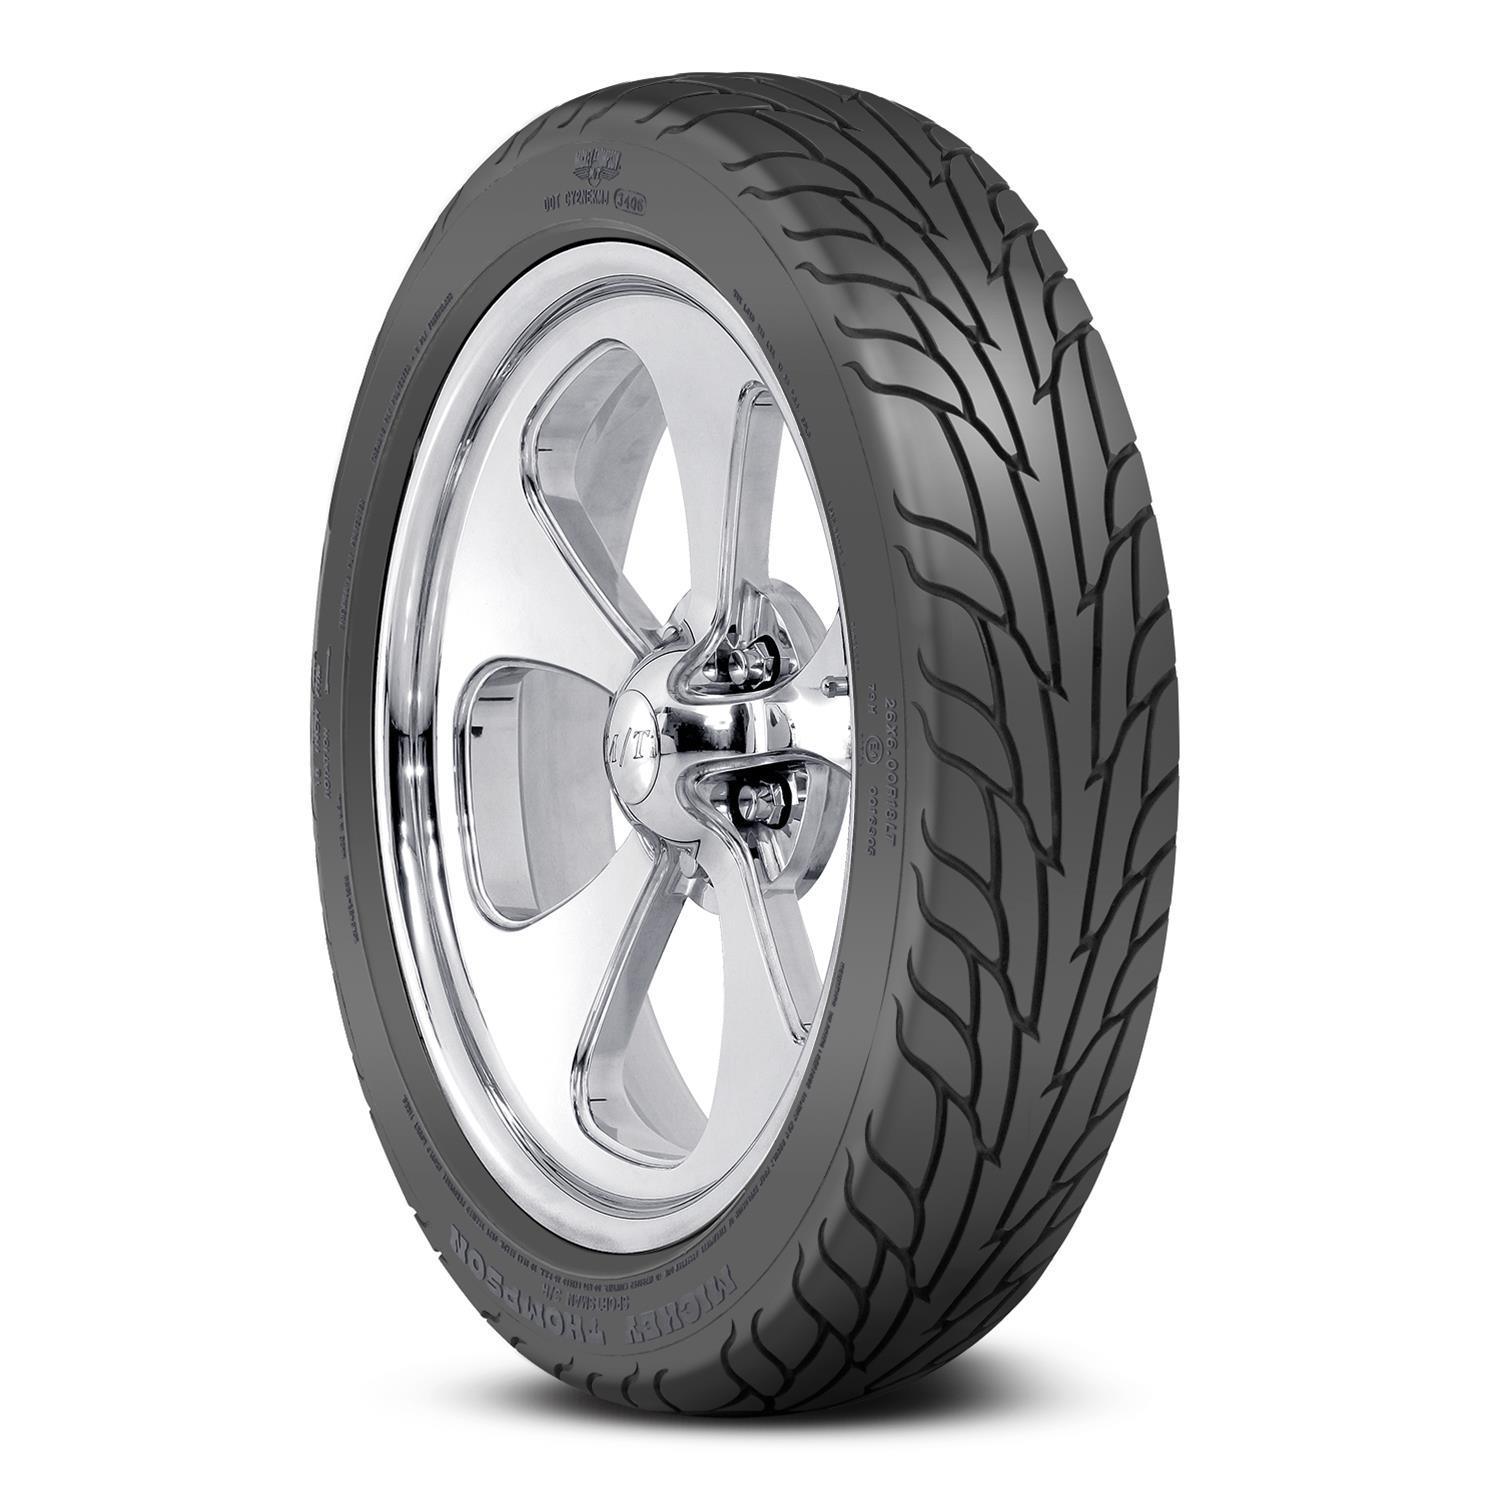 26x6.00R15LT Sportsman S/R Radial Tire - Burlile Performance Products